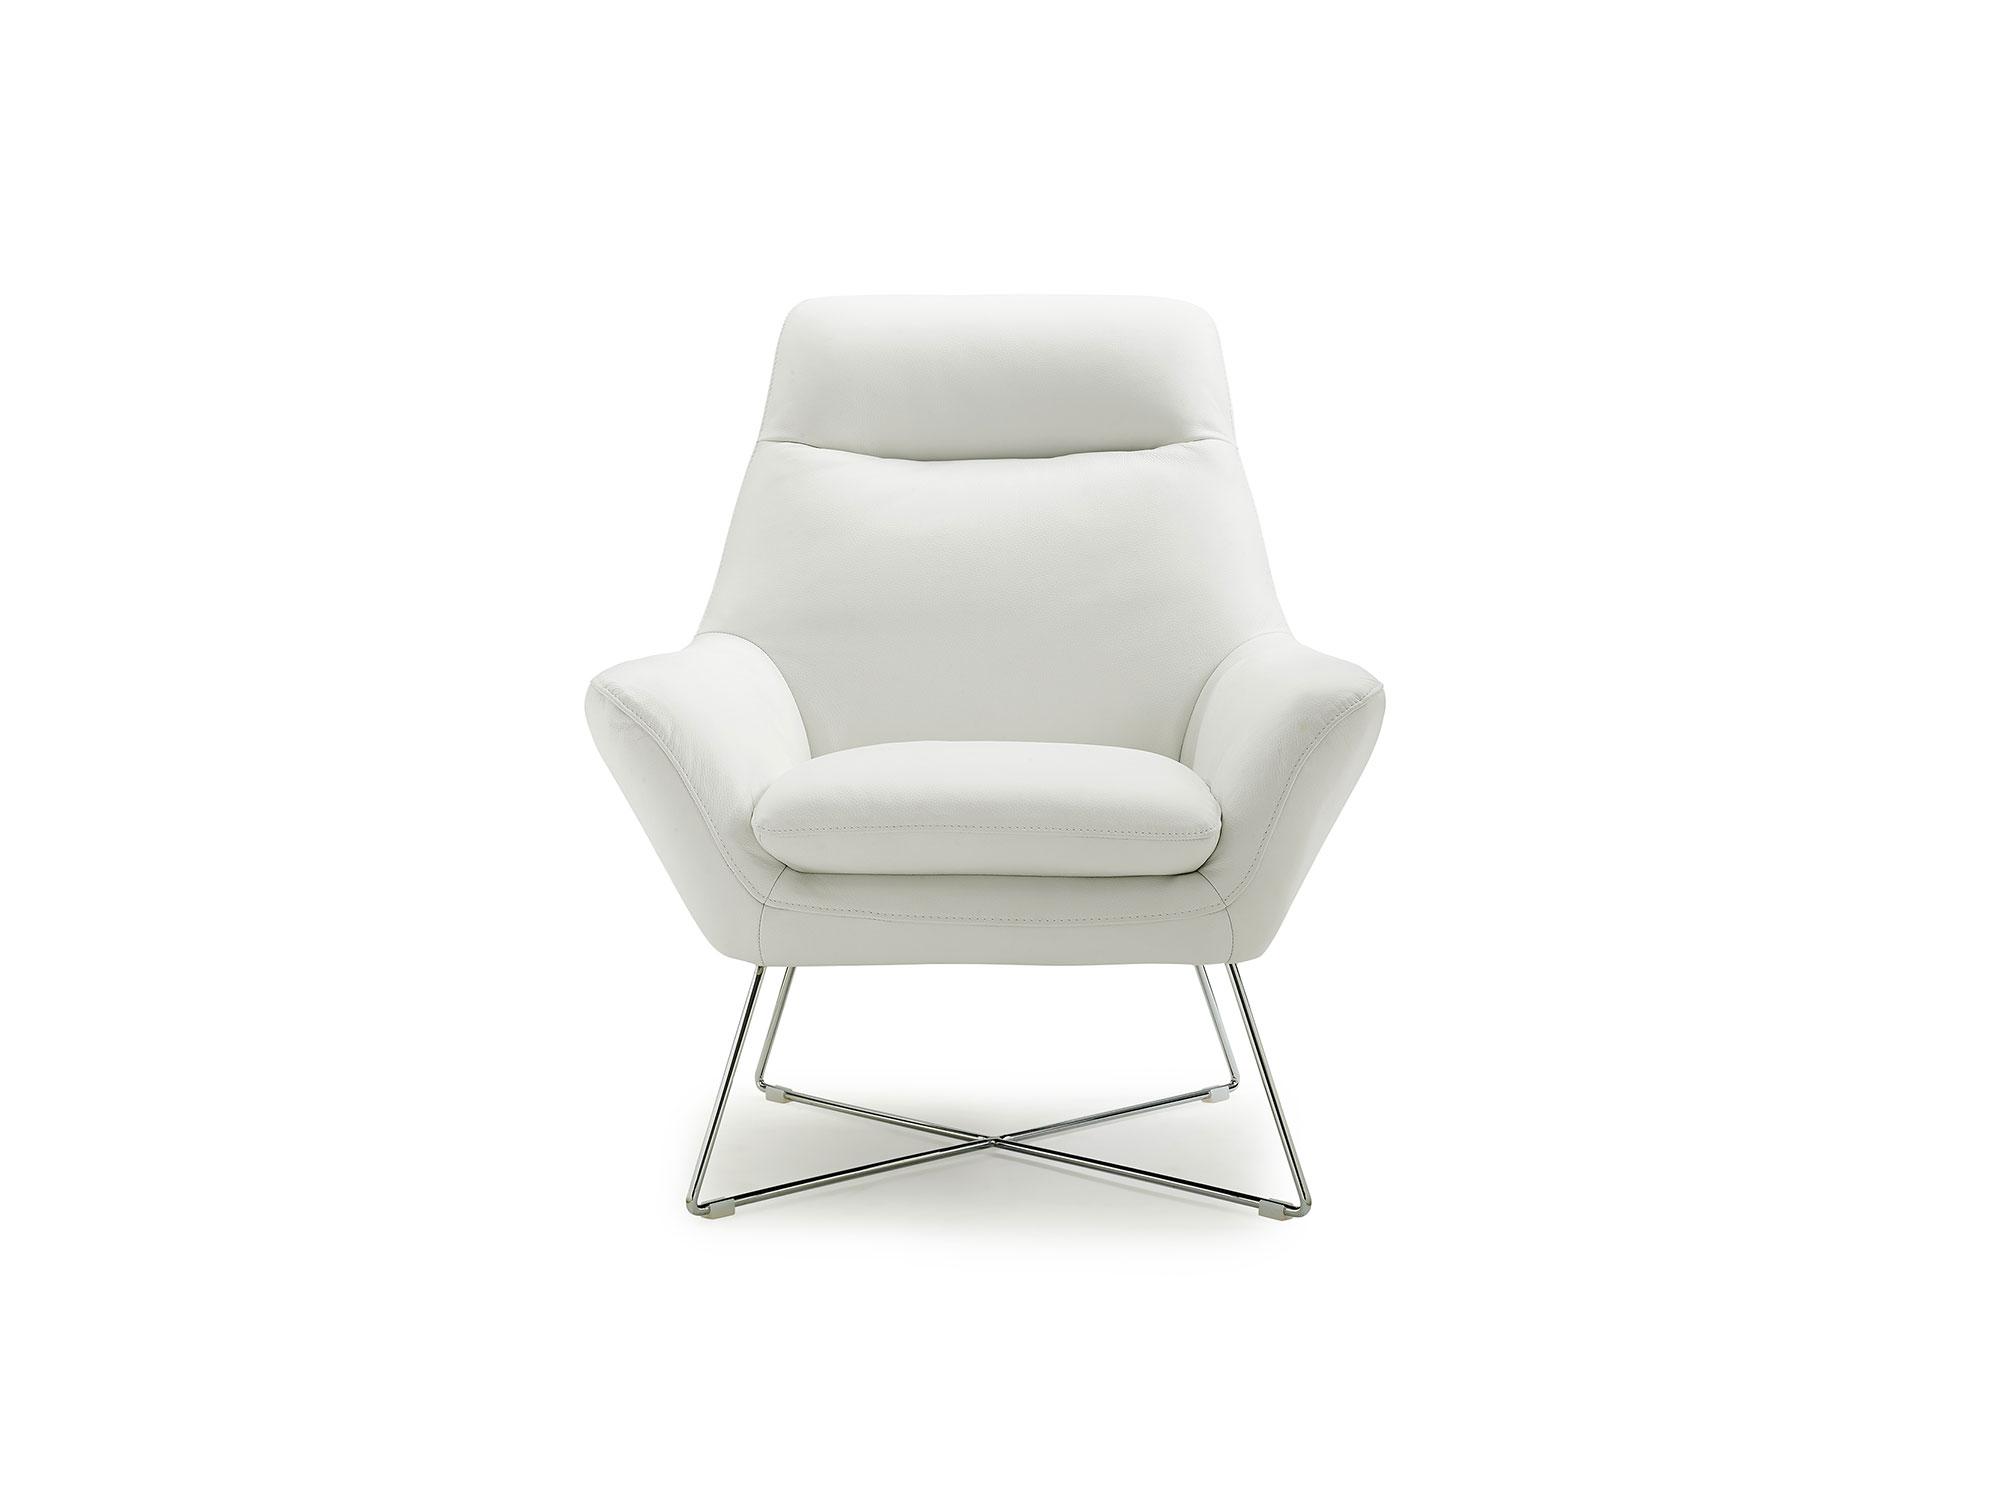 Modern Accent Chair CH1352L-WHT Daiana CH1352L-WHT in White Top grain leather